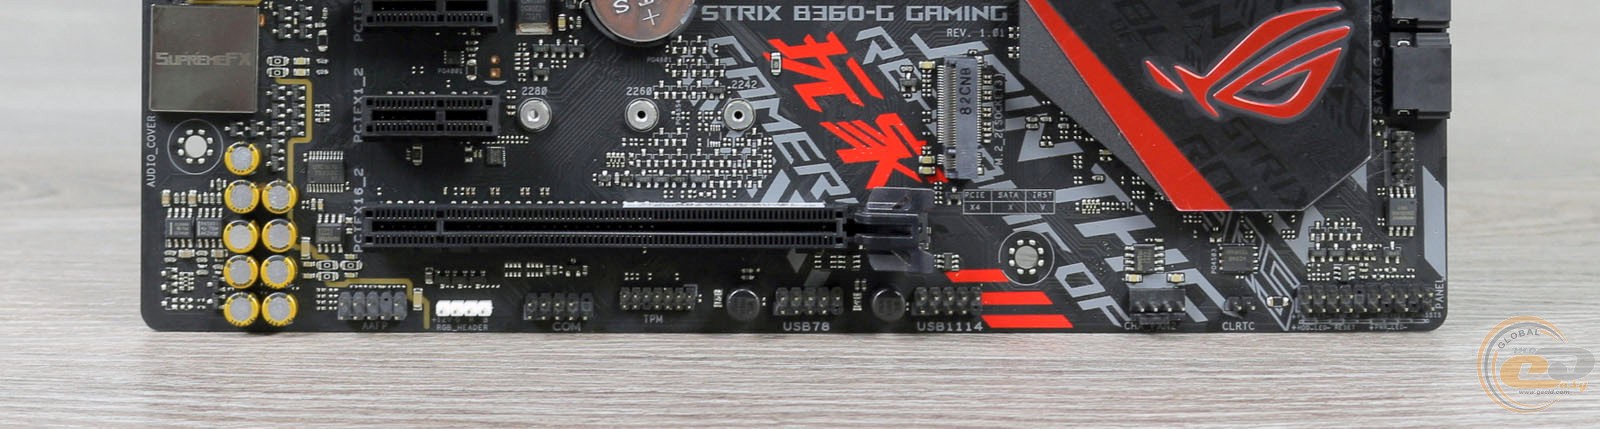 ASUS ROG Strix b360-g. ASUS ROG передняя панель. Джампер ROG Strix. Strix 8360-g Gaming. Strix b360 g gaming